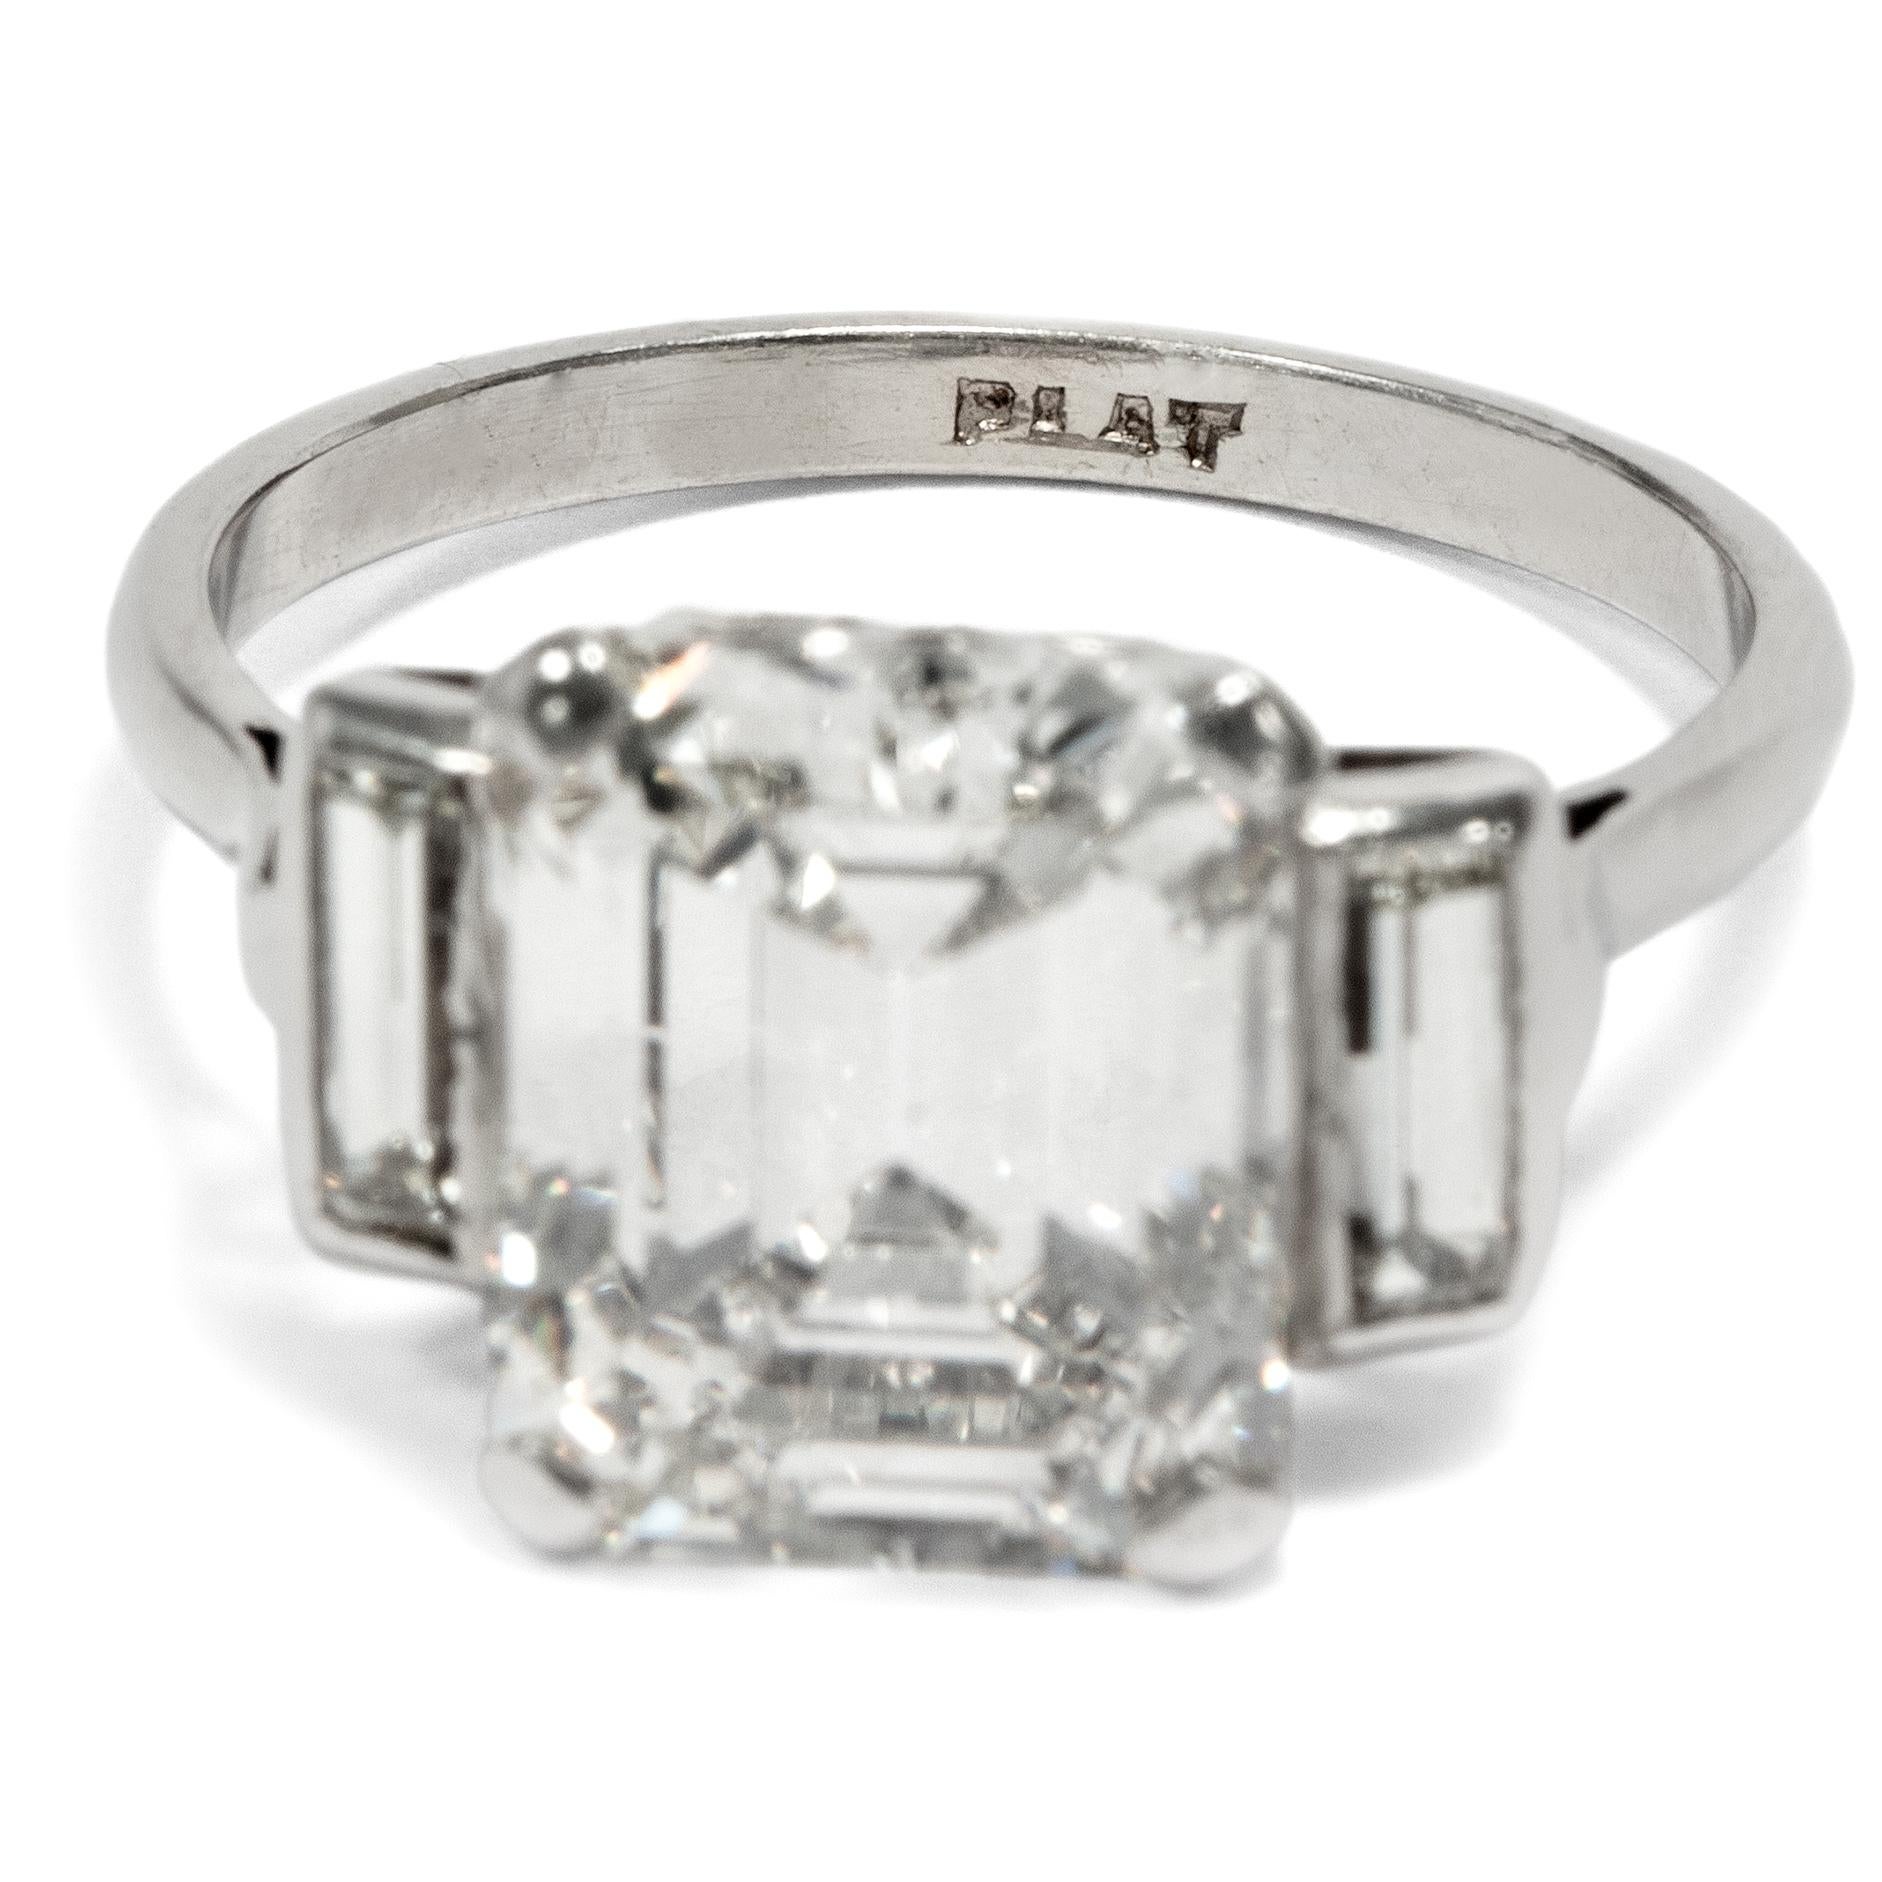 Certified 5.012 Carat Emerald Cut Diamond Art Deco circa 1935 Engagement Ring 2